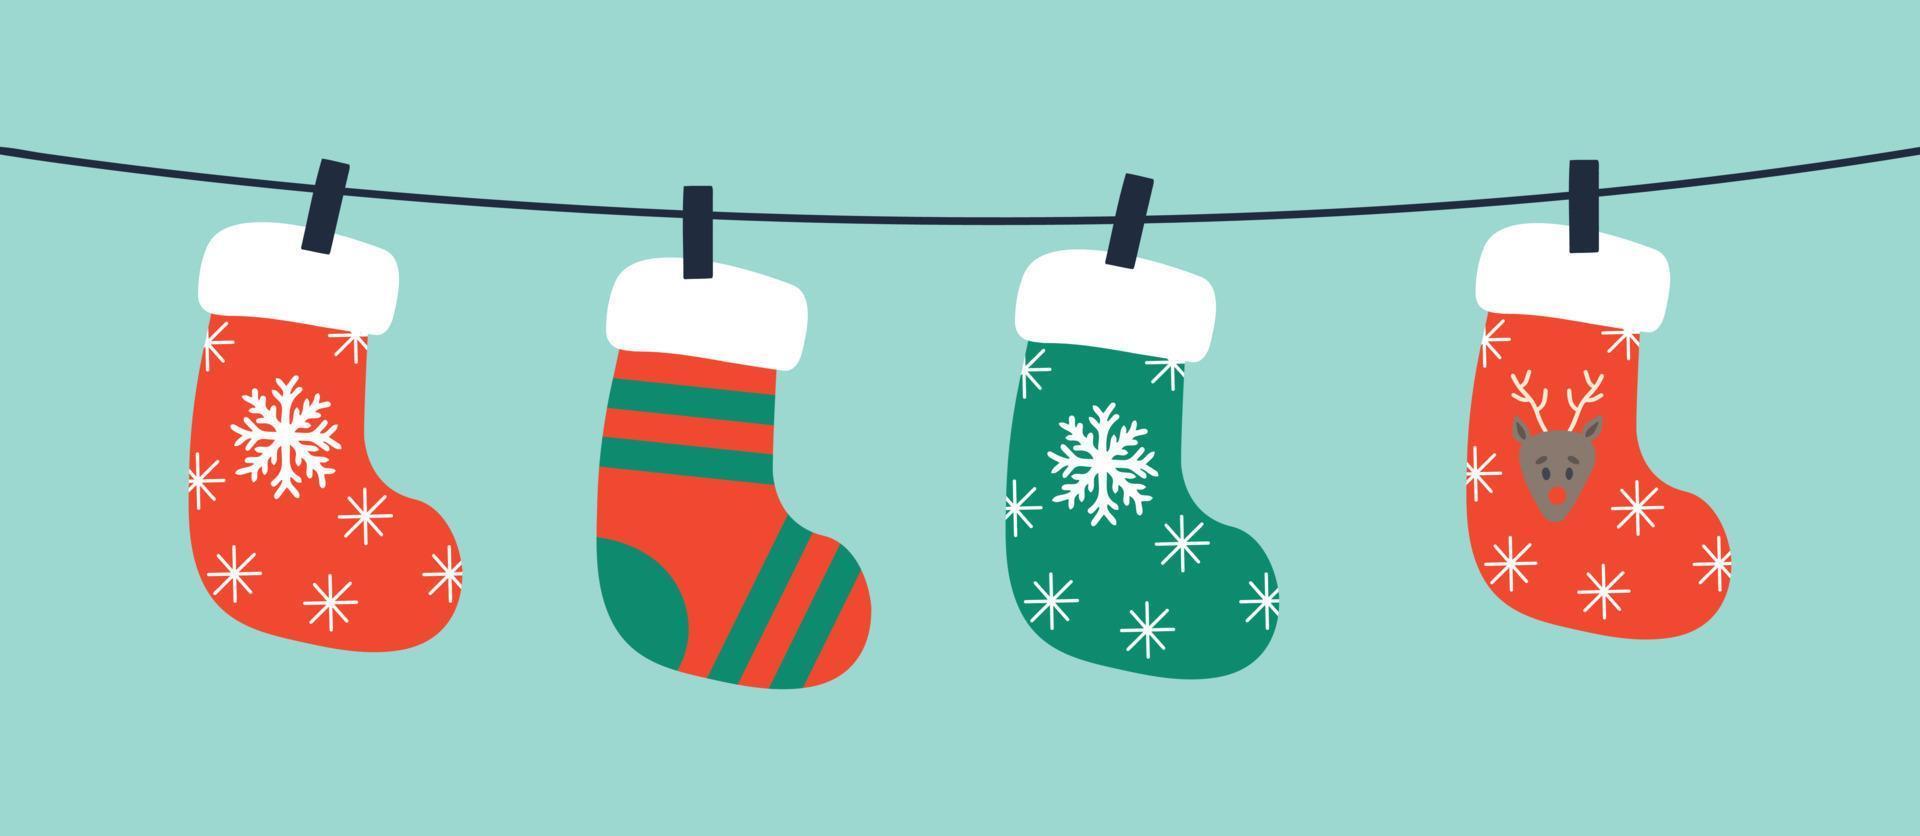 Christmas socks vector background. Various Christmas socks hanging on a rope.